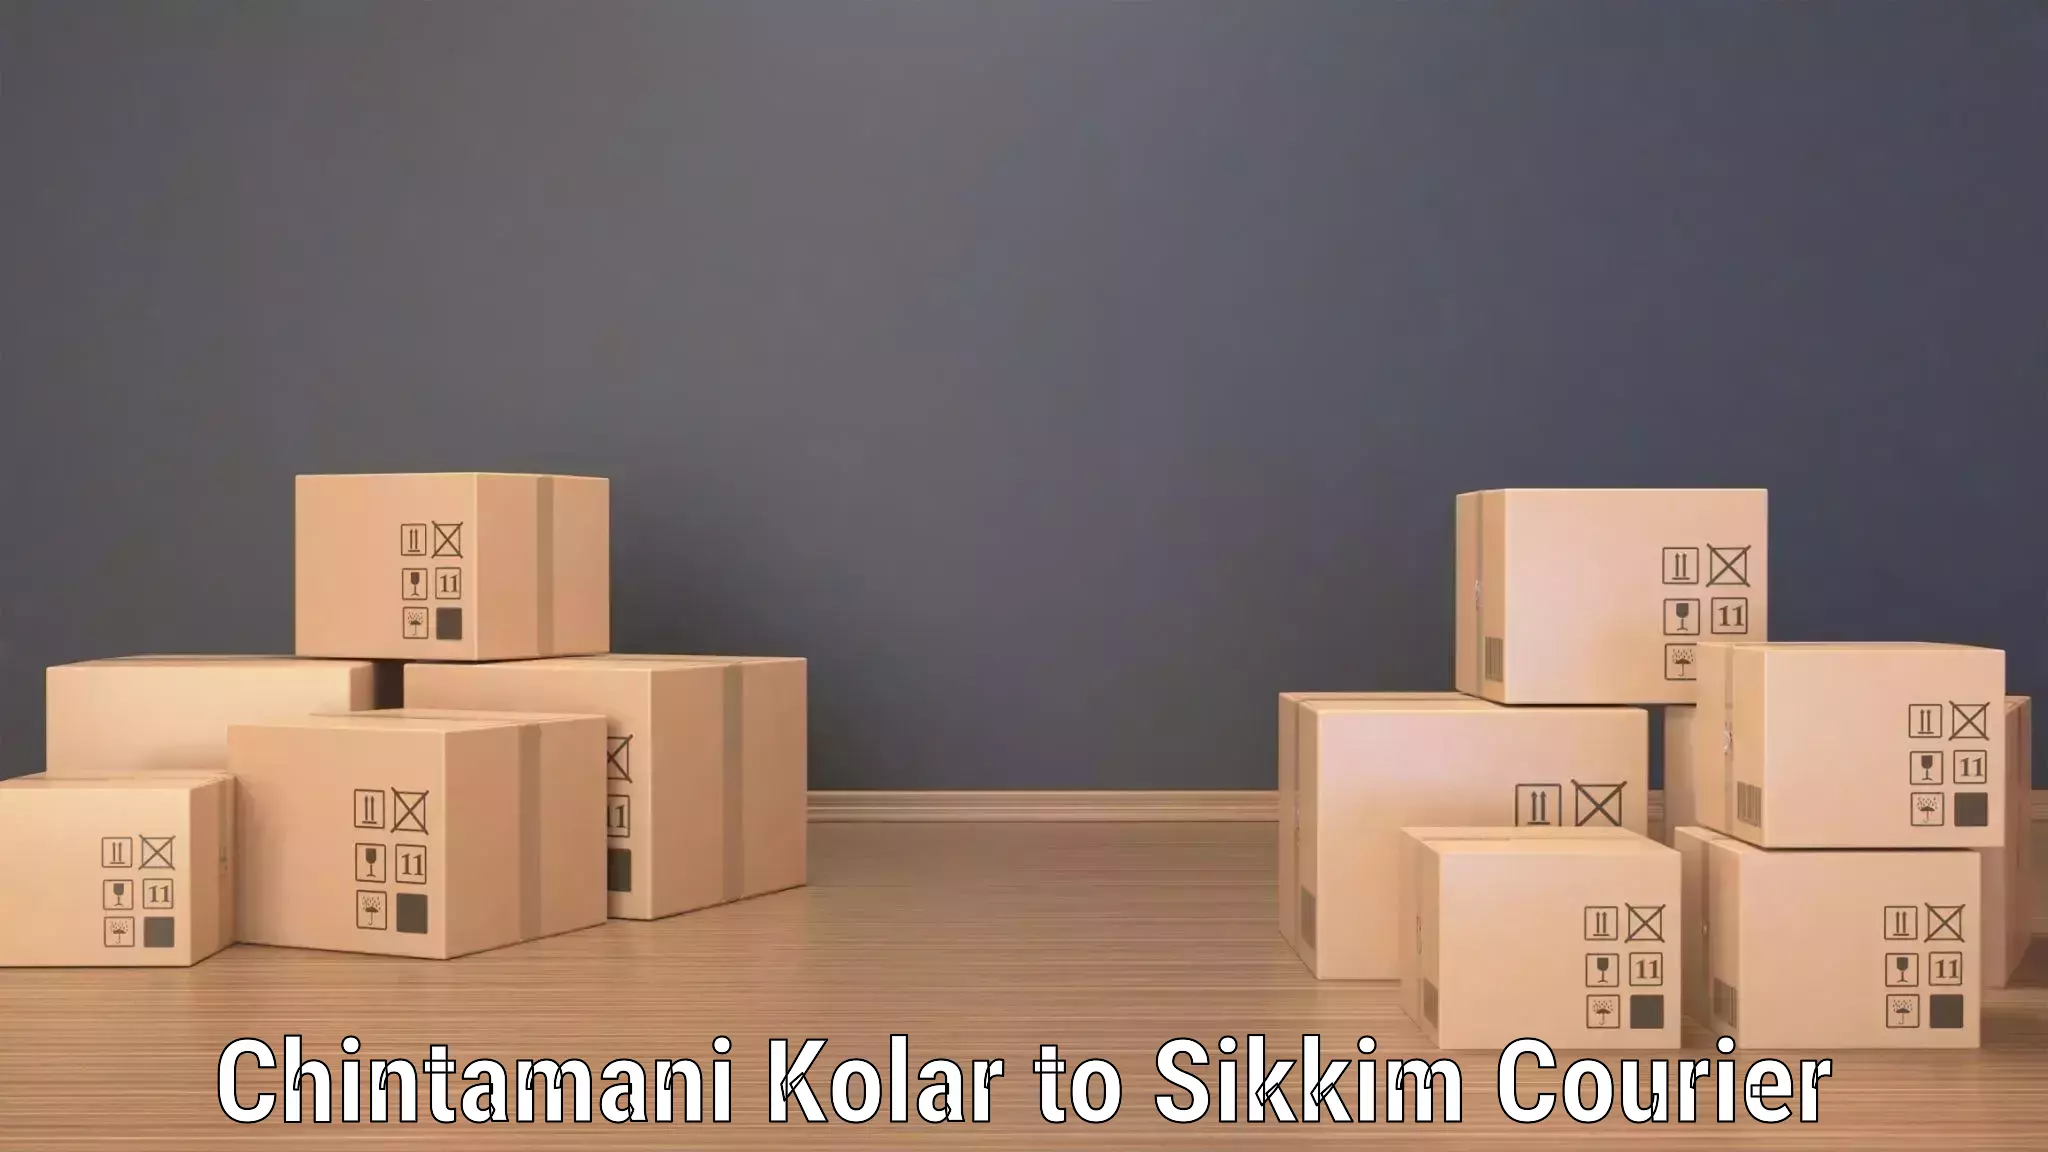 Automated parcel services Chintamani Kolar to East Sikkim